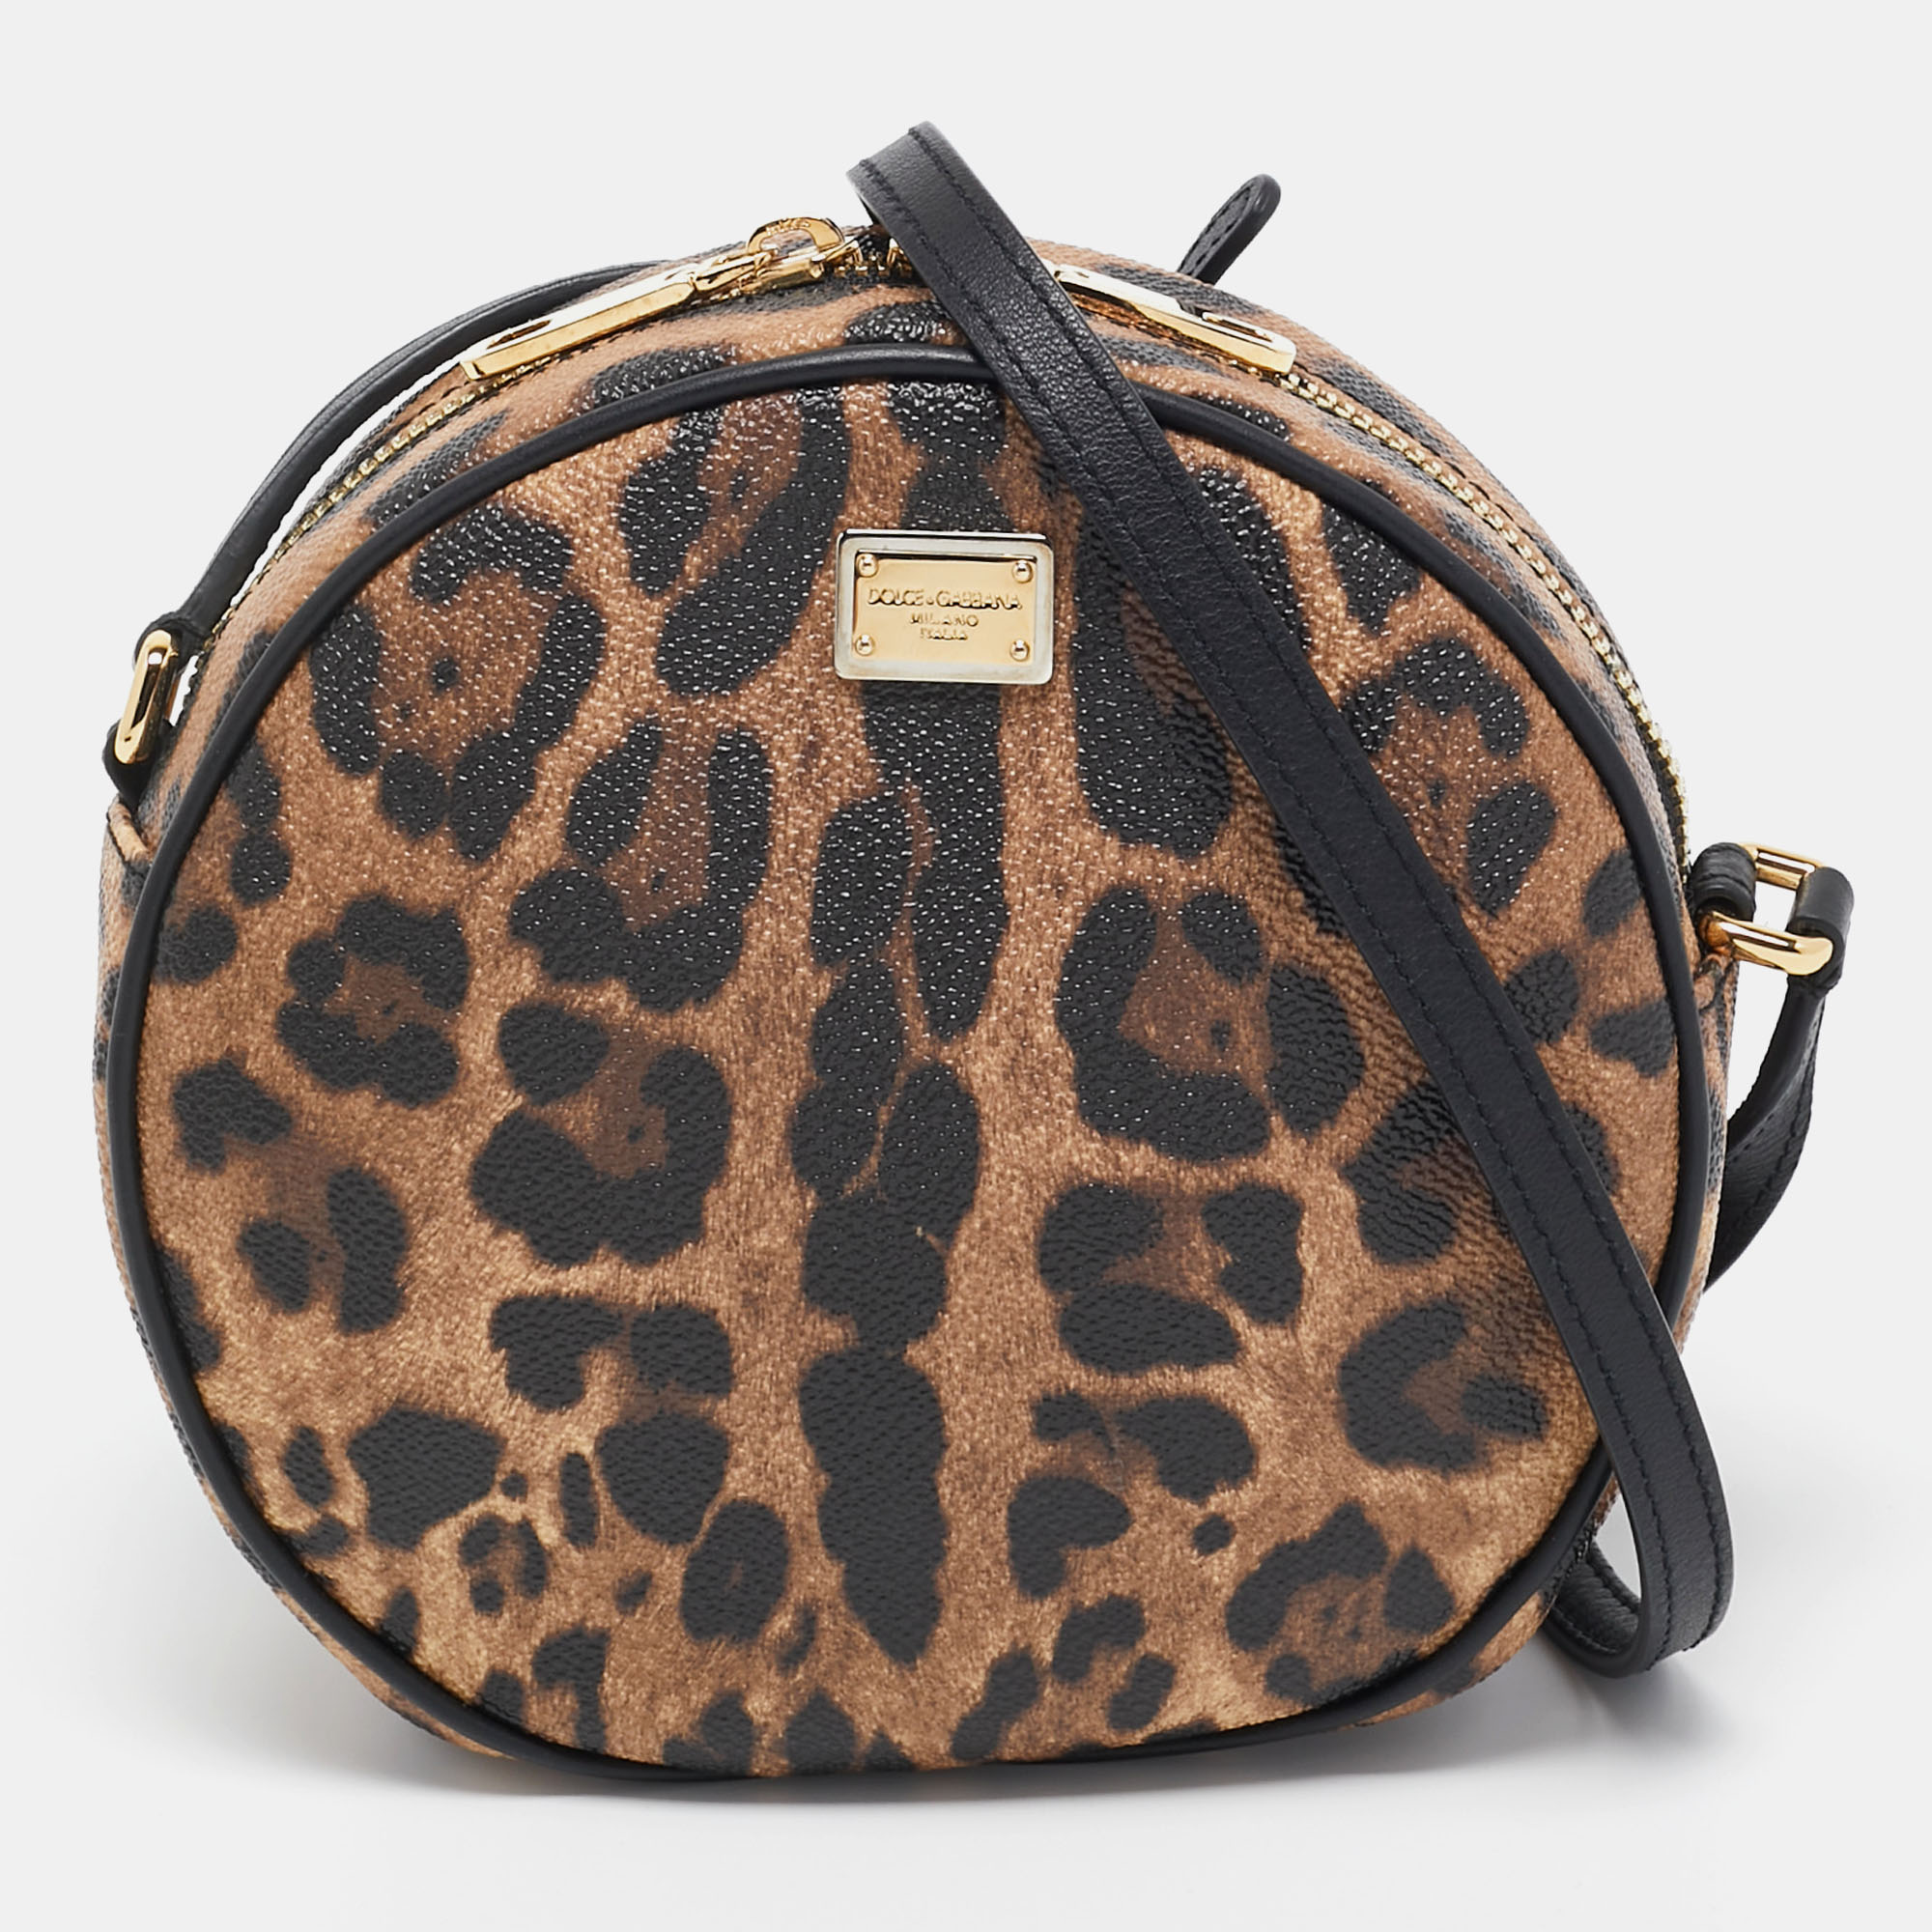 Dolce & Gabbana Beige/Brown Leopard Print Coated Canvas Glam Round Crossbody Bag